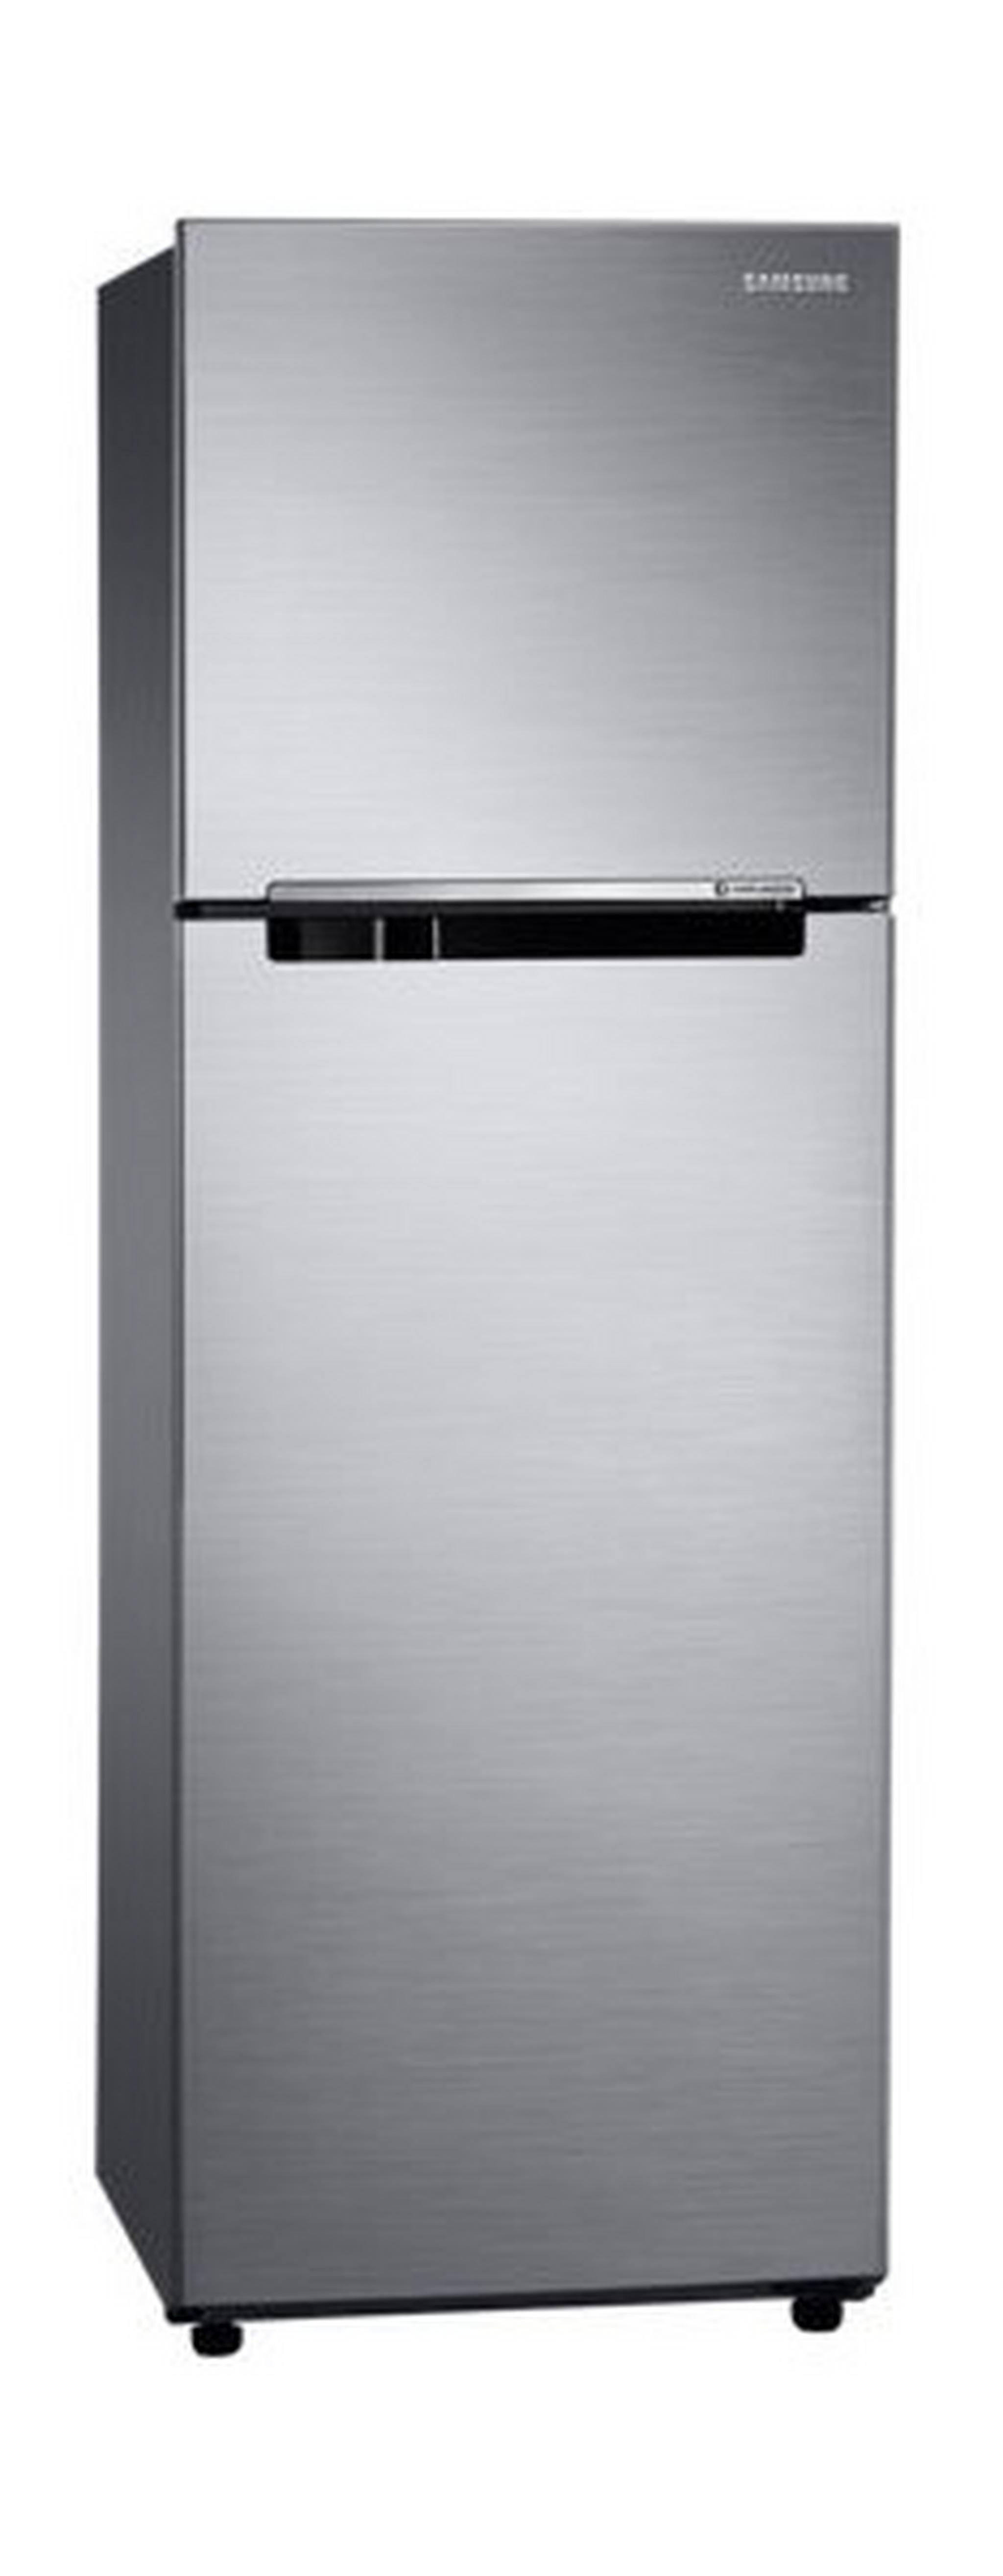 Samsung 11 CFT  Topmount Refrigerator (RT32K3002S8) - Stainless Steel